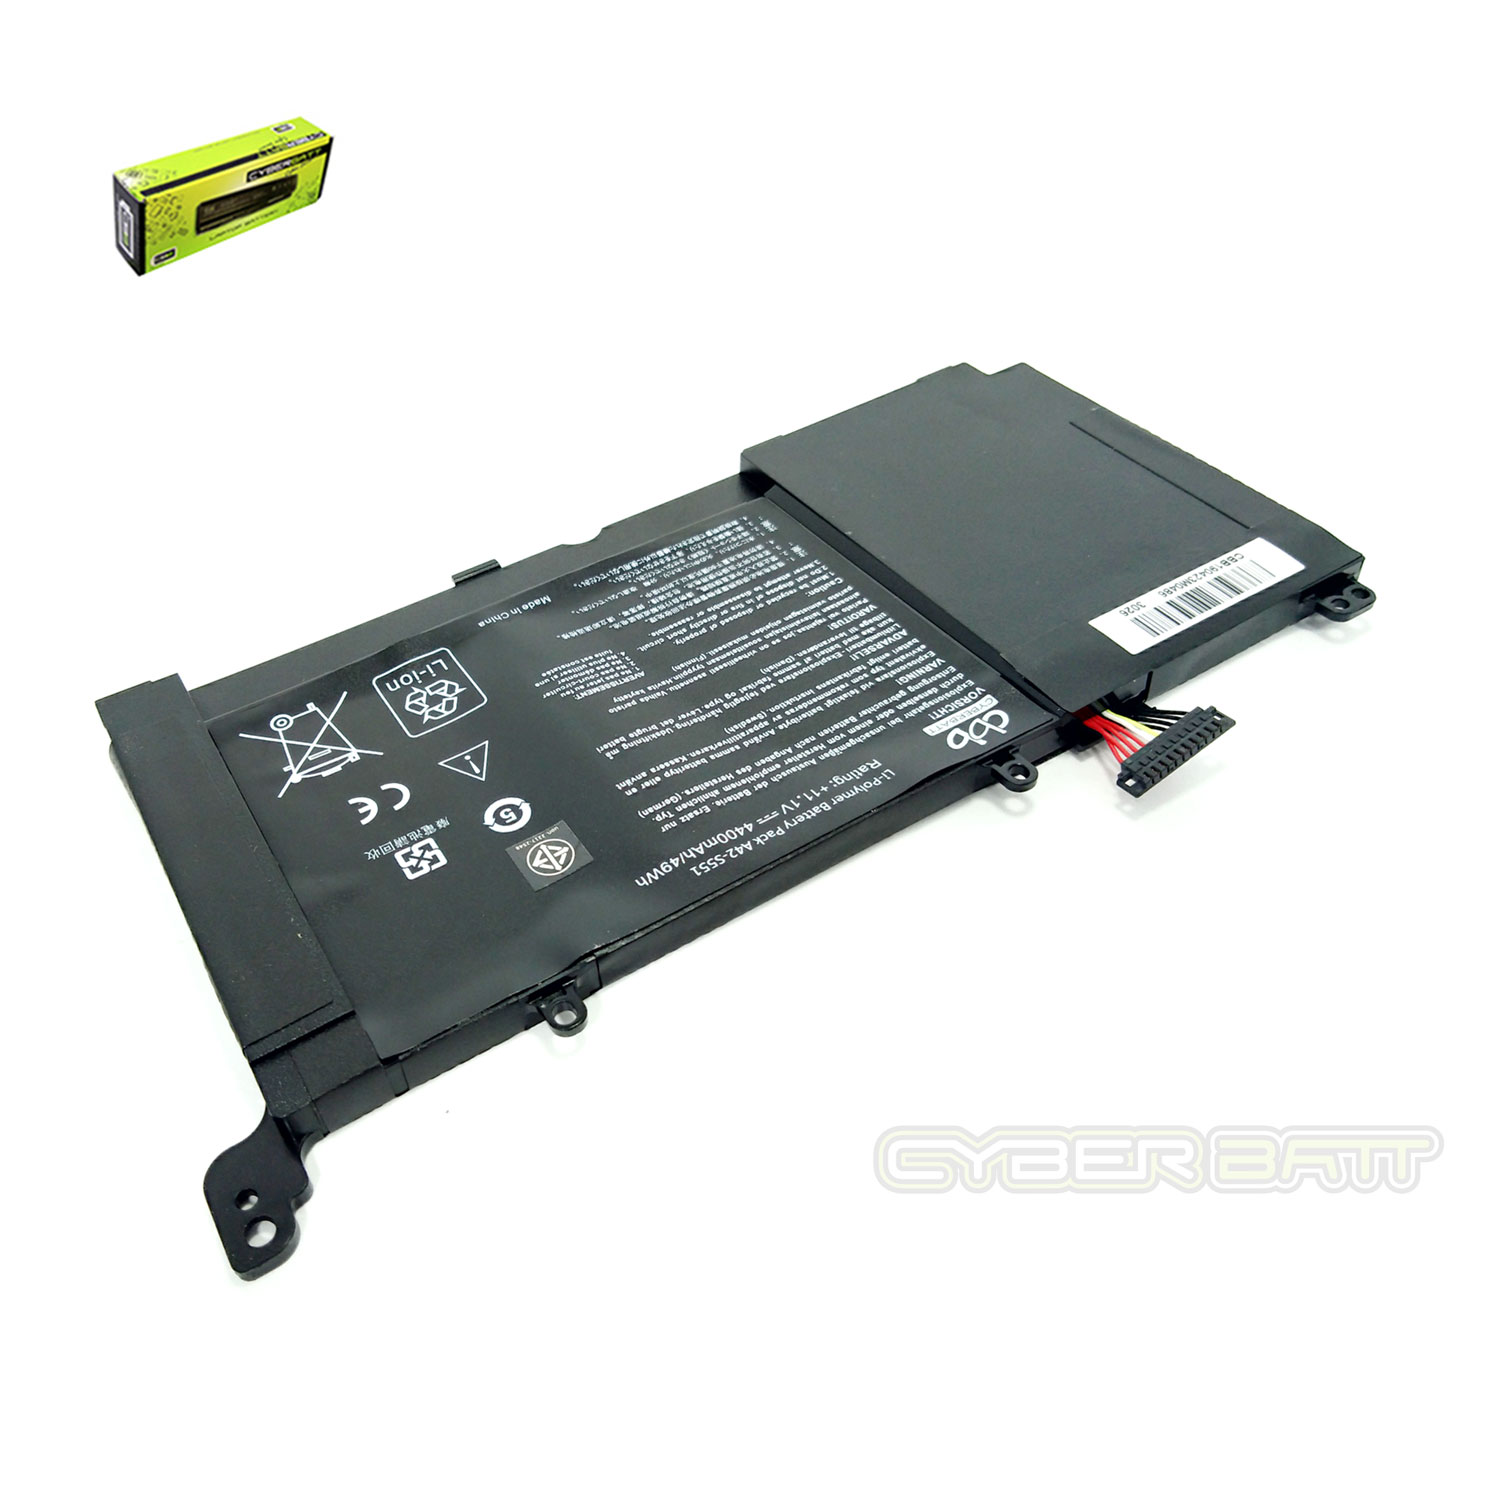 Battery Asus Vivobook K551 K551L : 11.1V-4400mAh/49Wh Black (CBB)